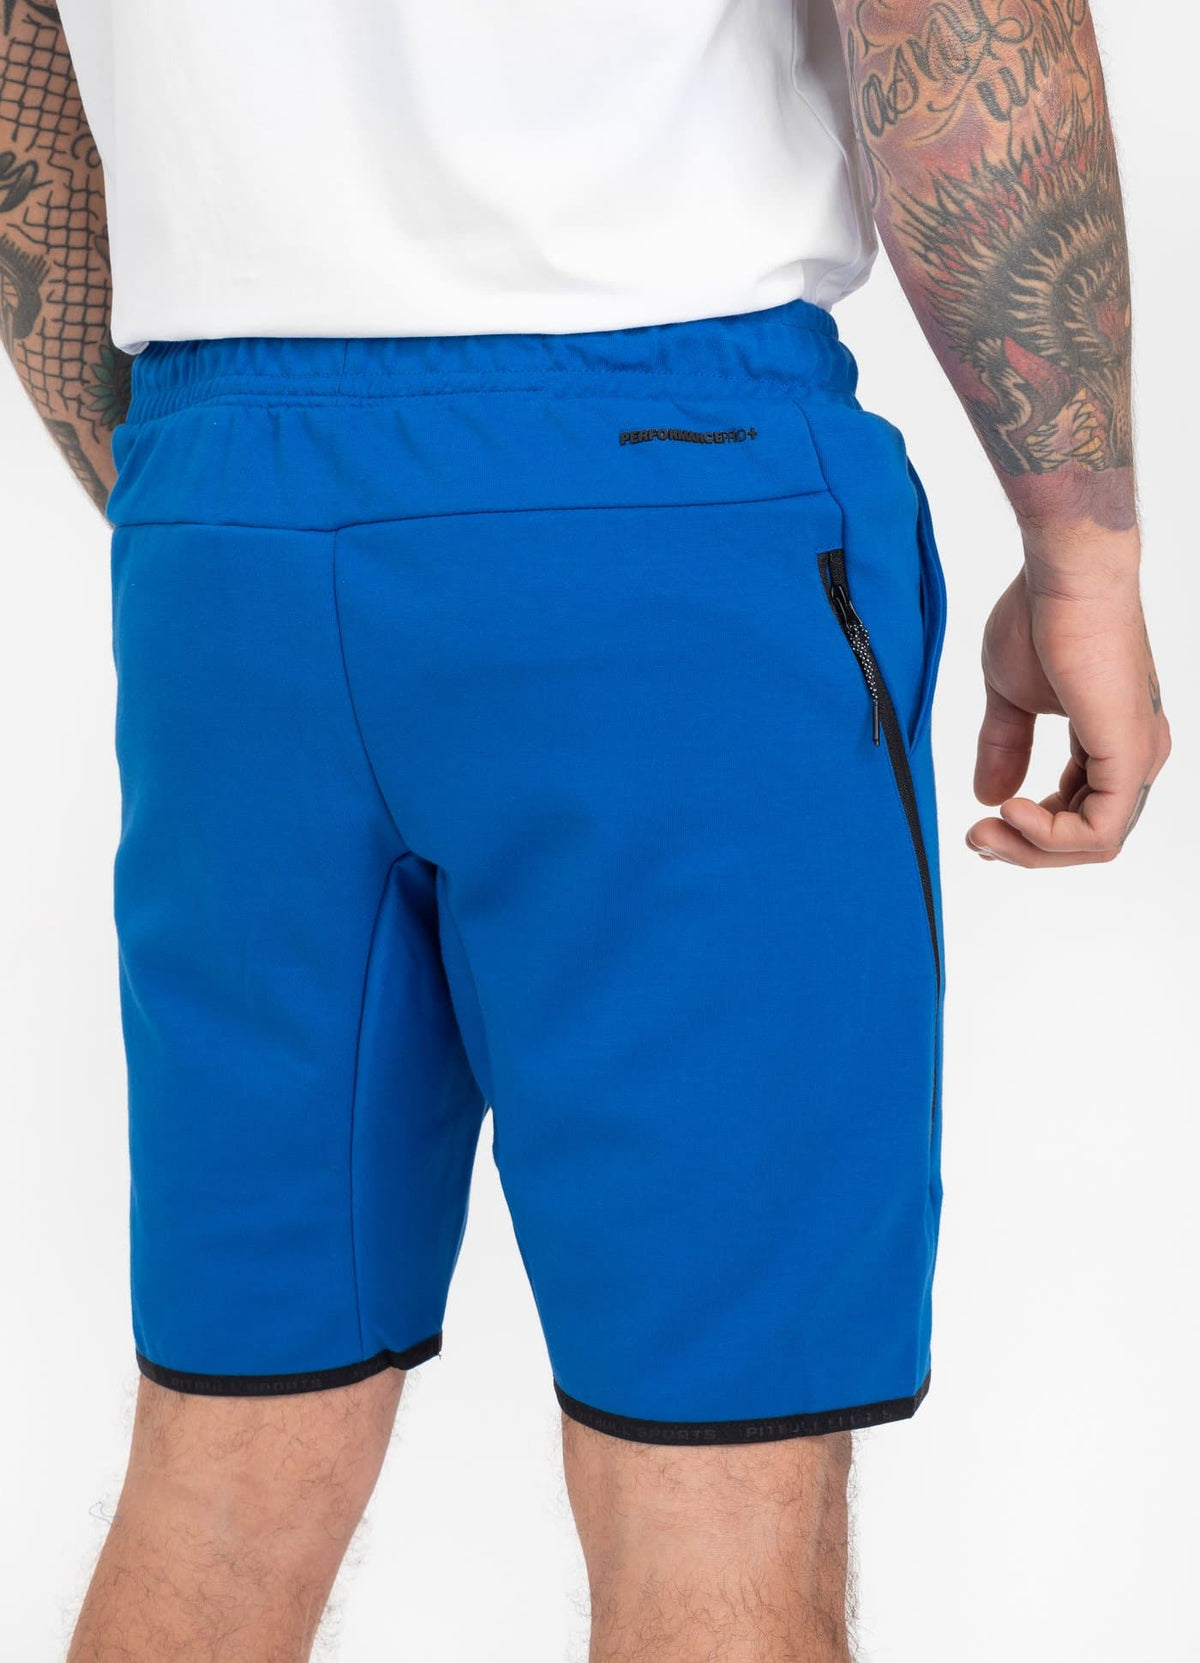 Shorts ALCORN Royal Blue - Pitbull West Coast International Store 